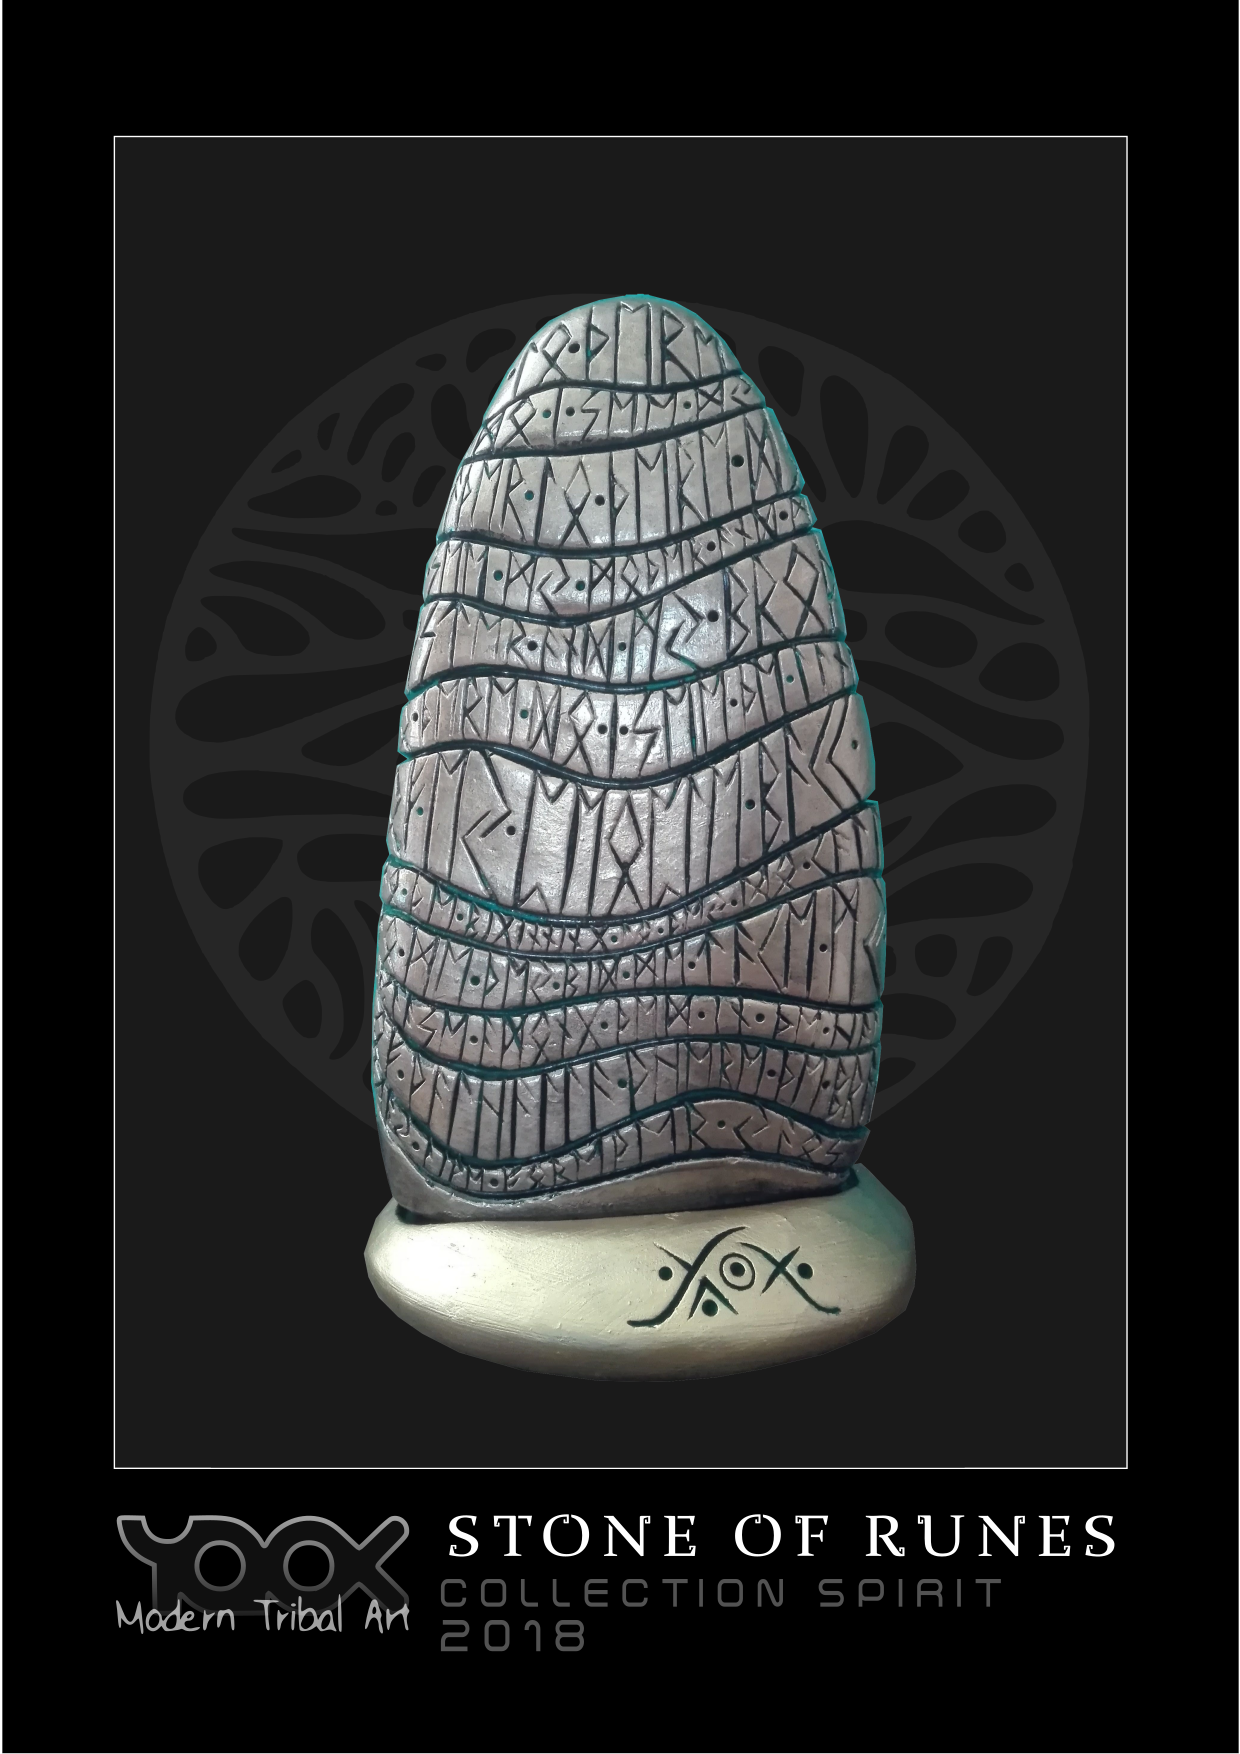 Stone of runes